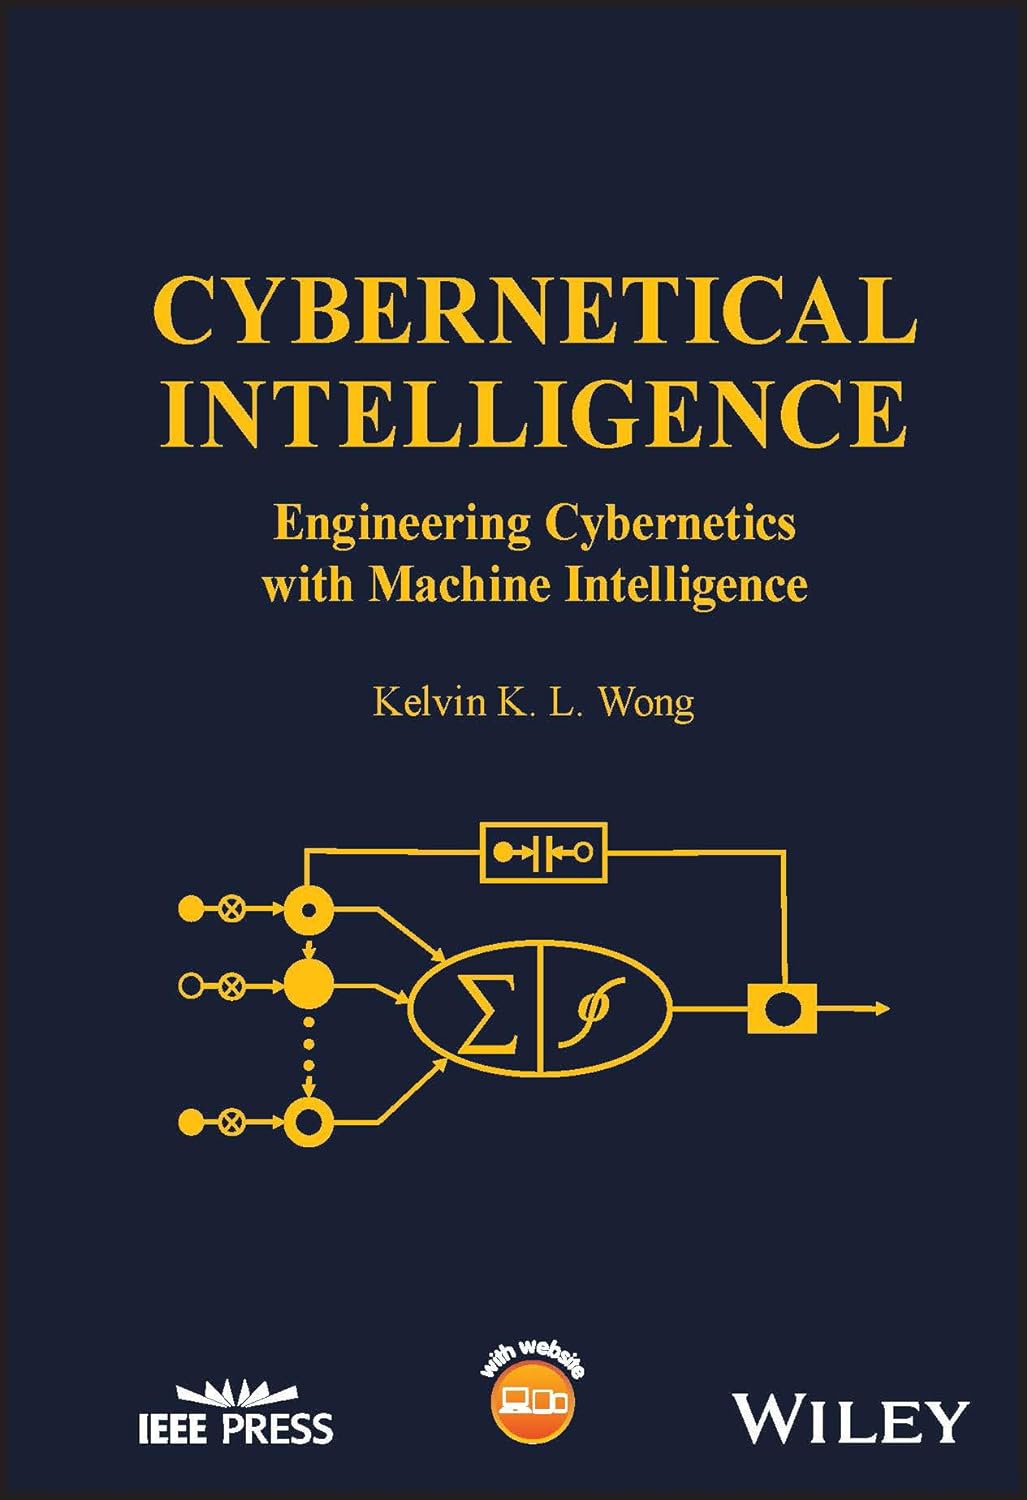 (EBook PDF)Cybernetical Intelligence: Engineering Cybernetics with Machine Intelligence by Kelvin K. L. Wong